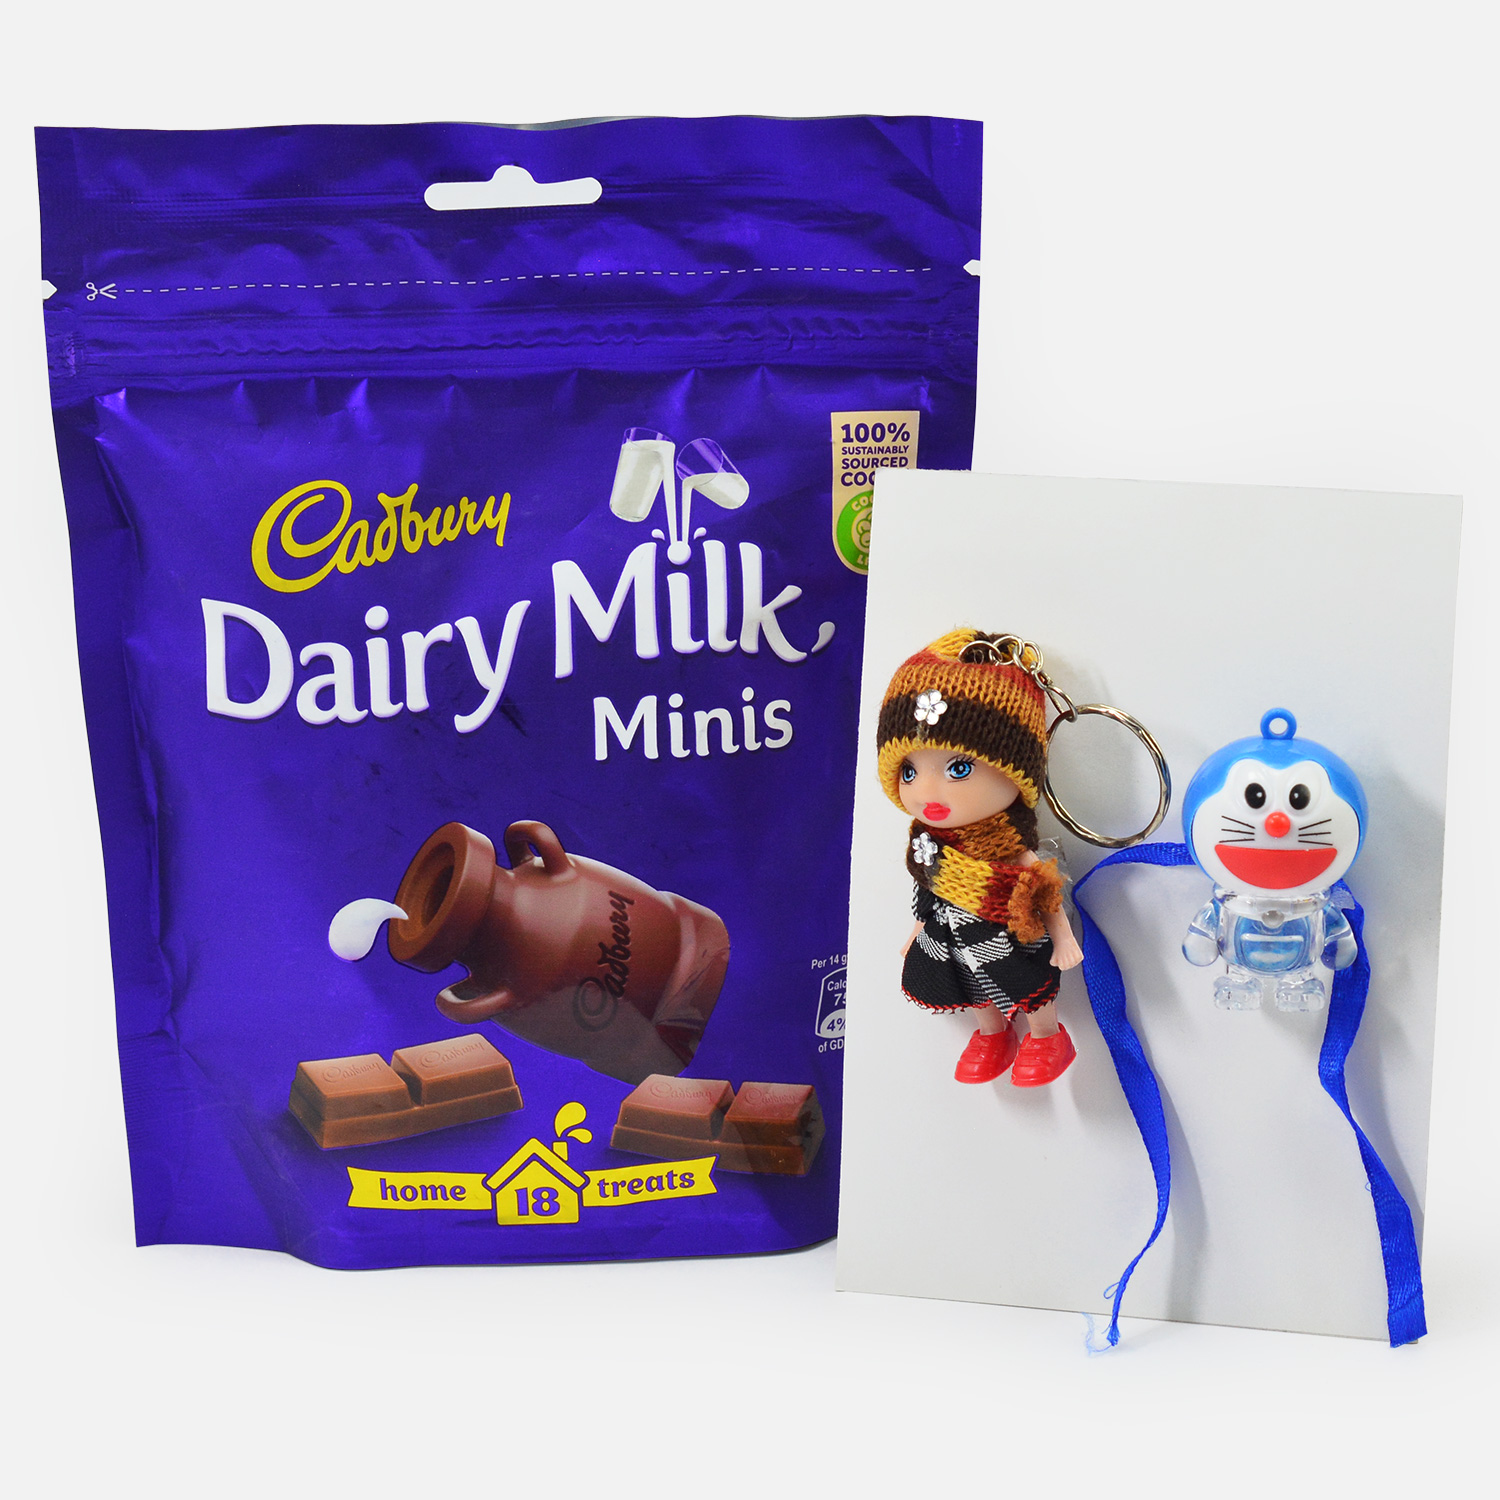 Two Toy Cartoon Kids Rakhis with Dairy Milk Minis Chocolate